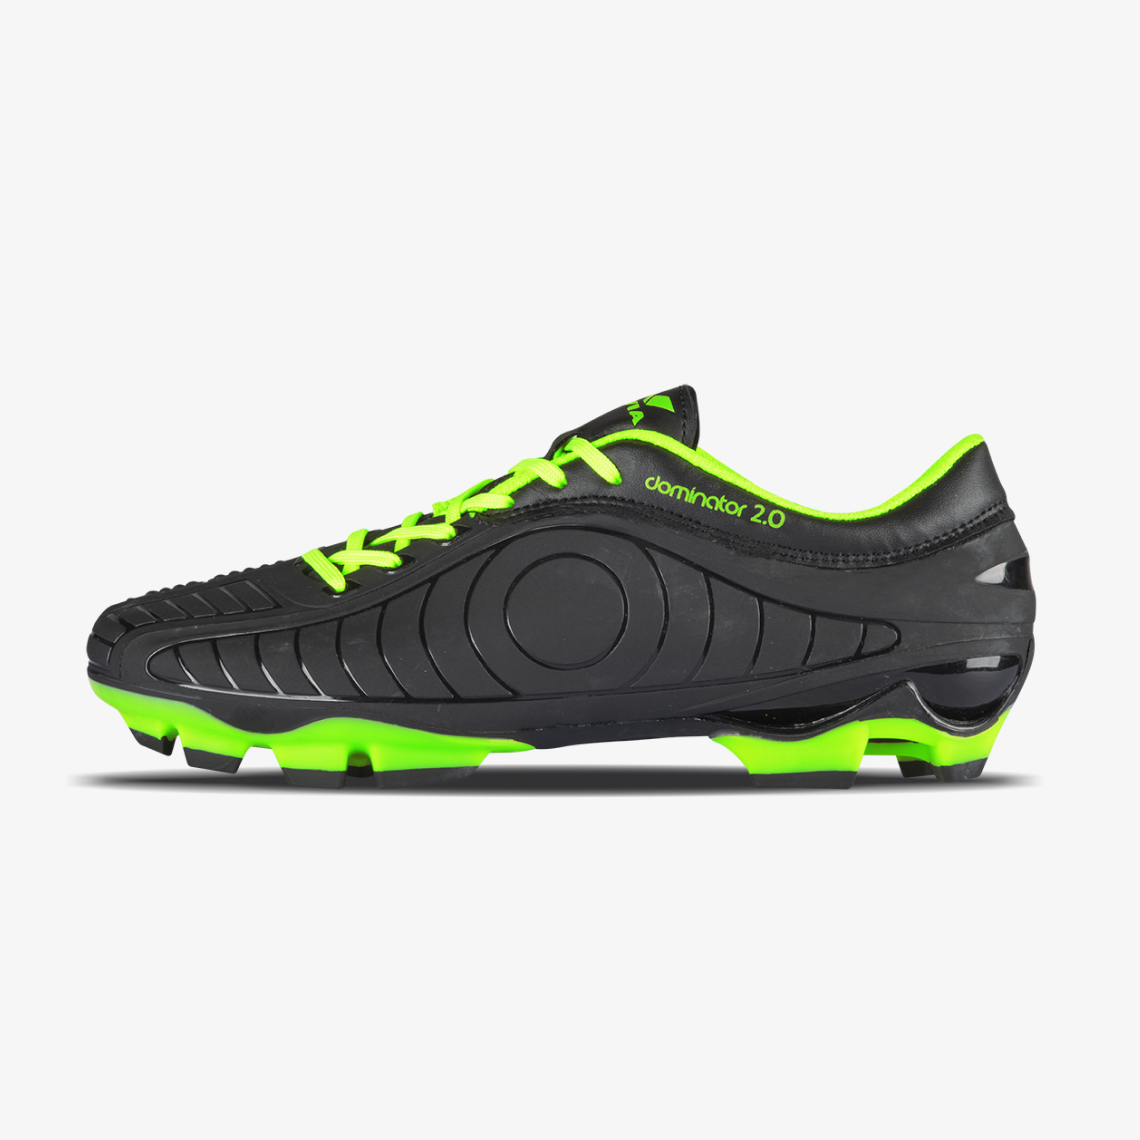 Nivia football shoes (black and green) - Sports Equipment - 1728919438